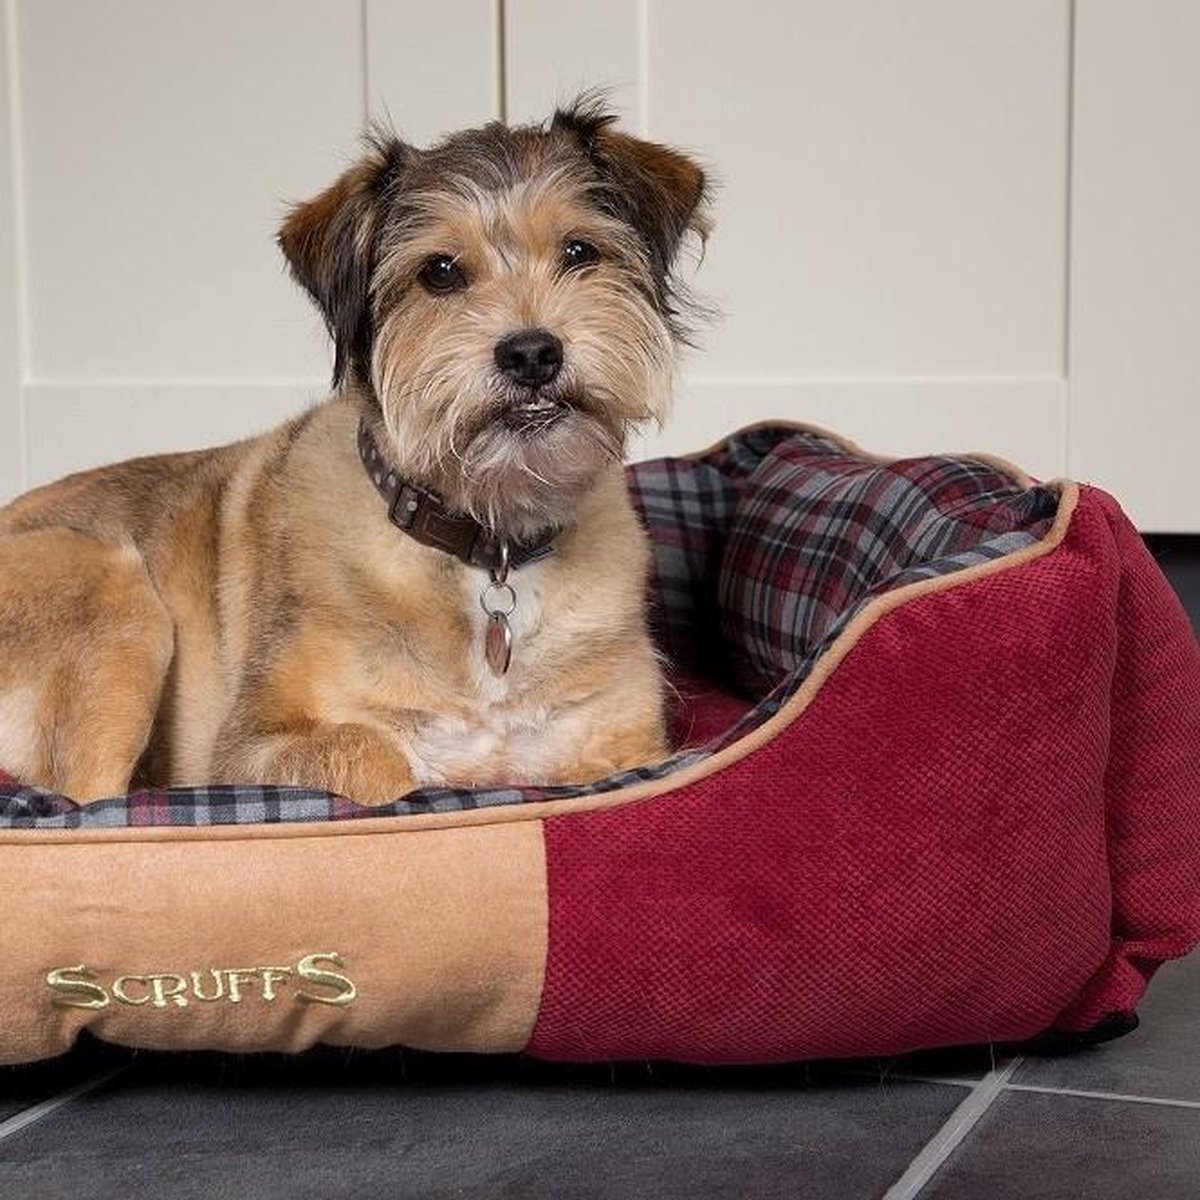 Scruffs Stevige Hondenmand van Hoogwaardige Chenille stof met anti-slip onderzijde - Highland Box Bed - Blauw, Rood of Grijs in S/M/L/XL - Kleur: Grijs, Maat: Extra Large grijs